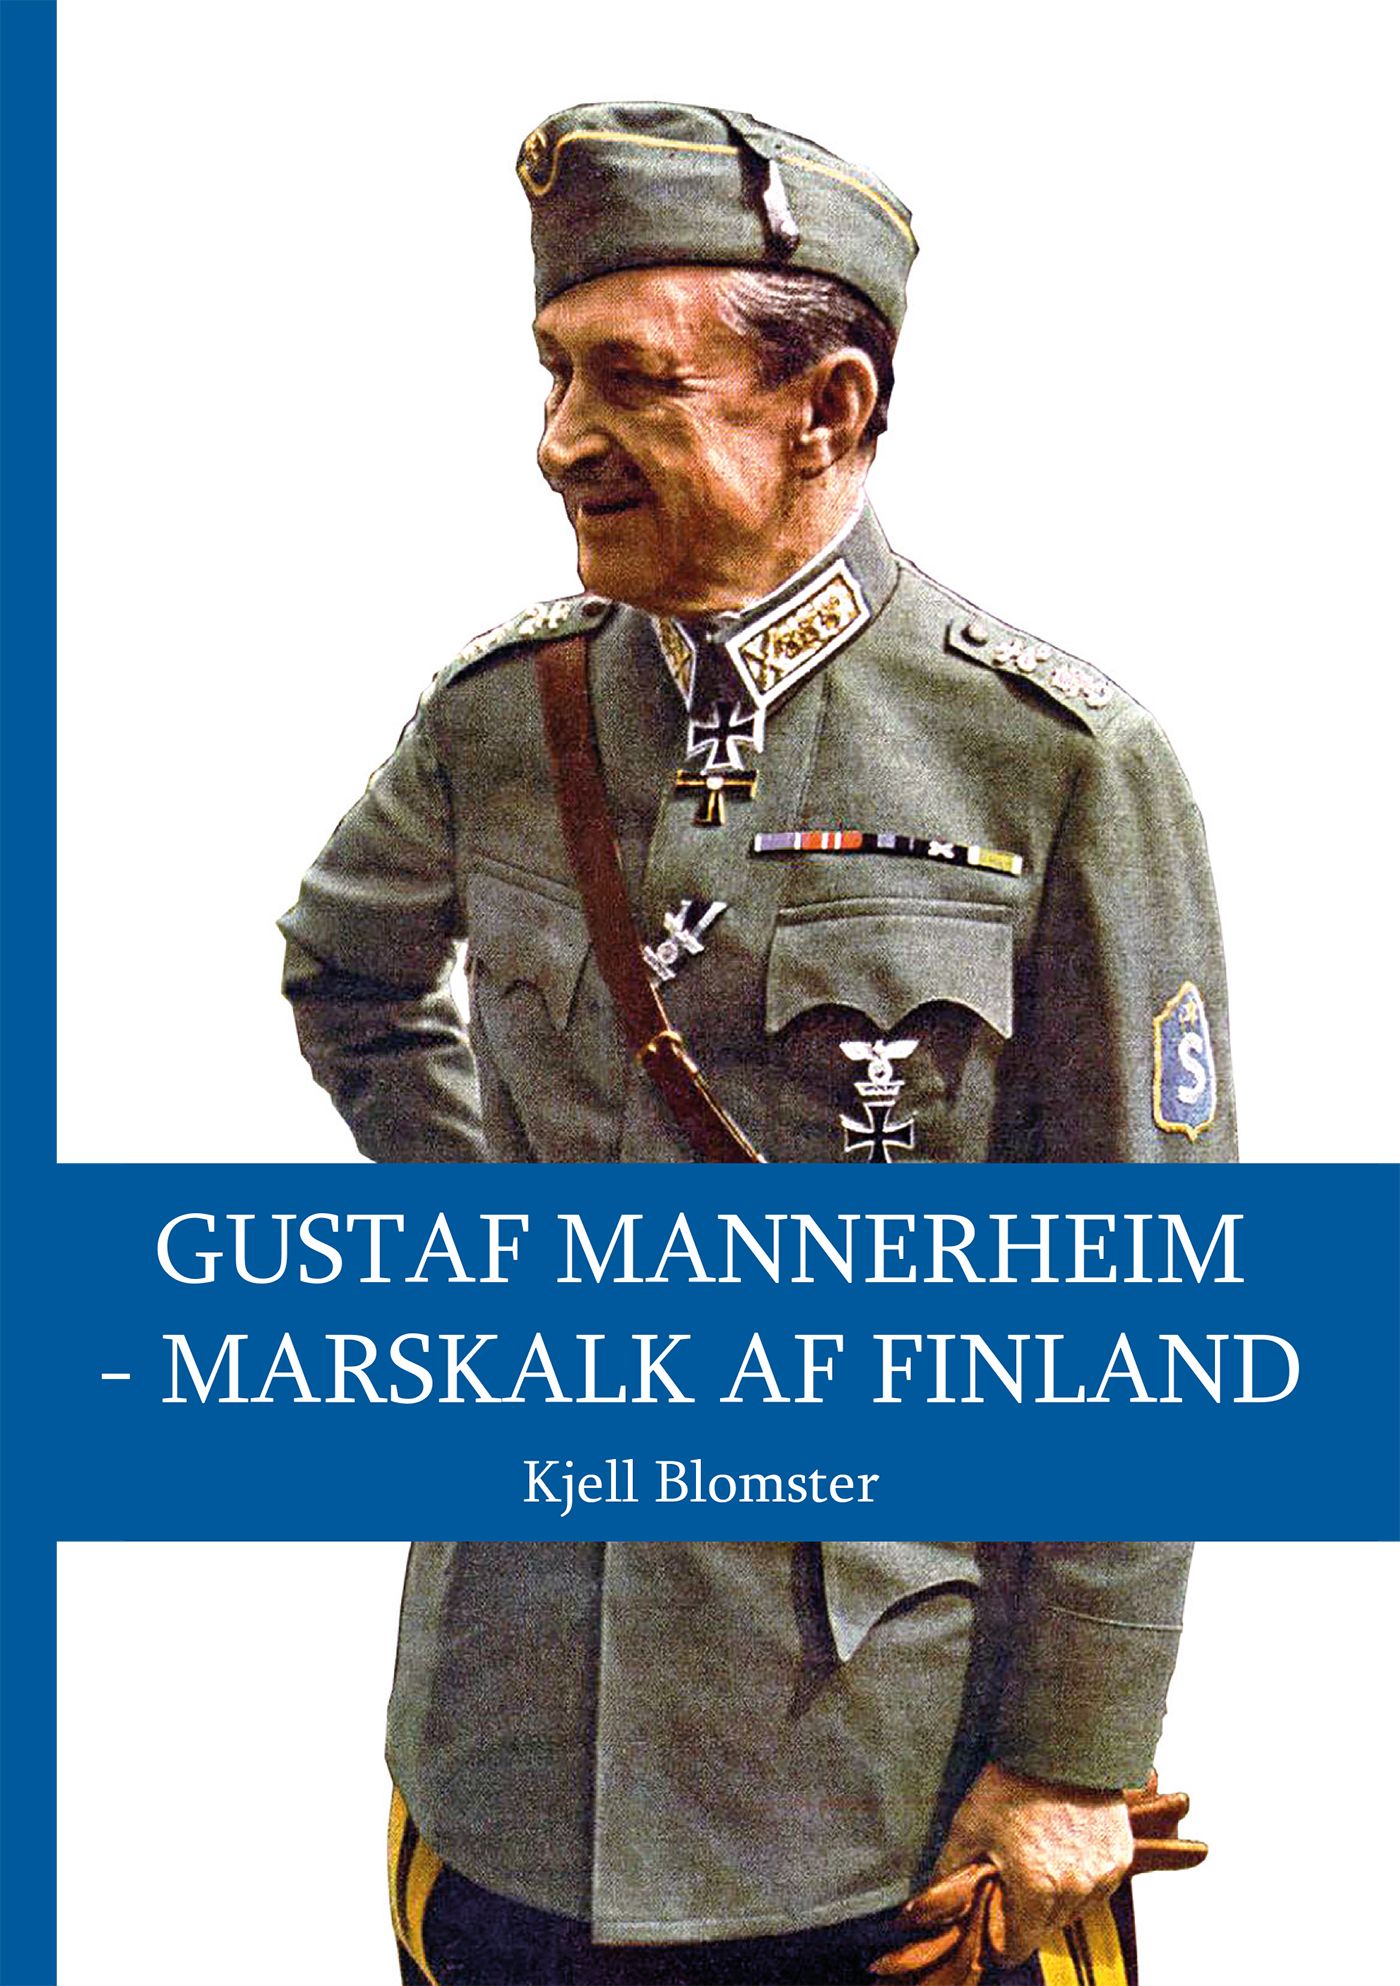 Gustaf Mannerheim - Marskalk af Finland, eBook by Kjell Blomster